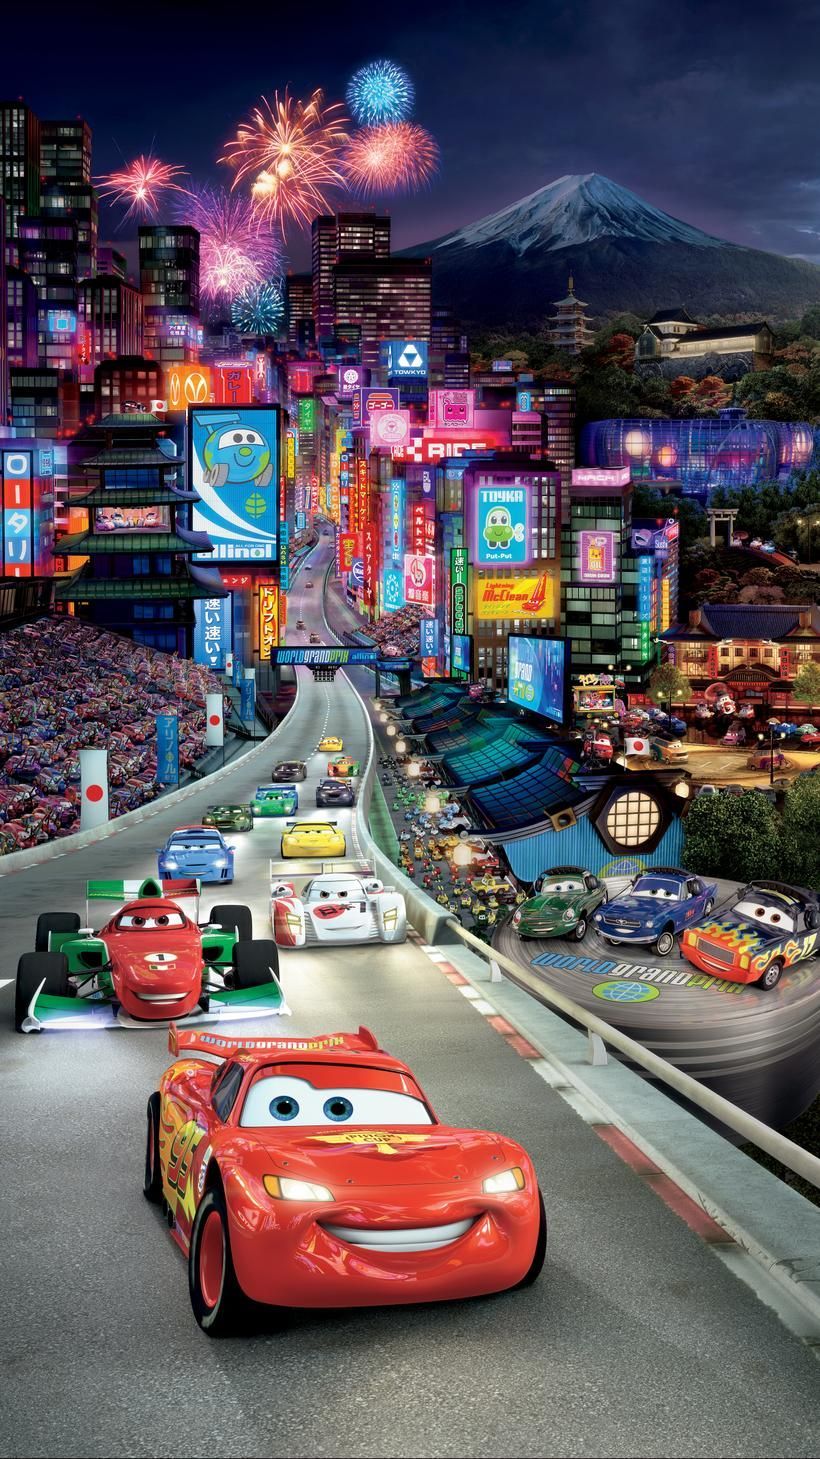 Cars 3 (2017) Phone Wallpaper. Moviemania. Disney cars wallpaper, Cars cartoon disney, Cars movie